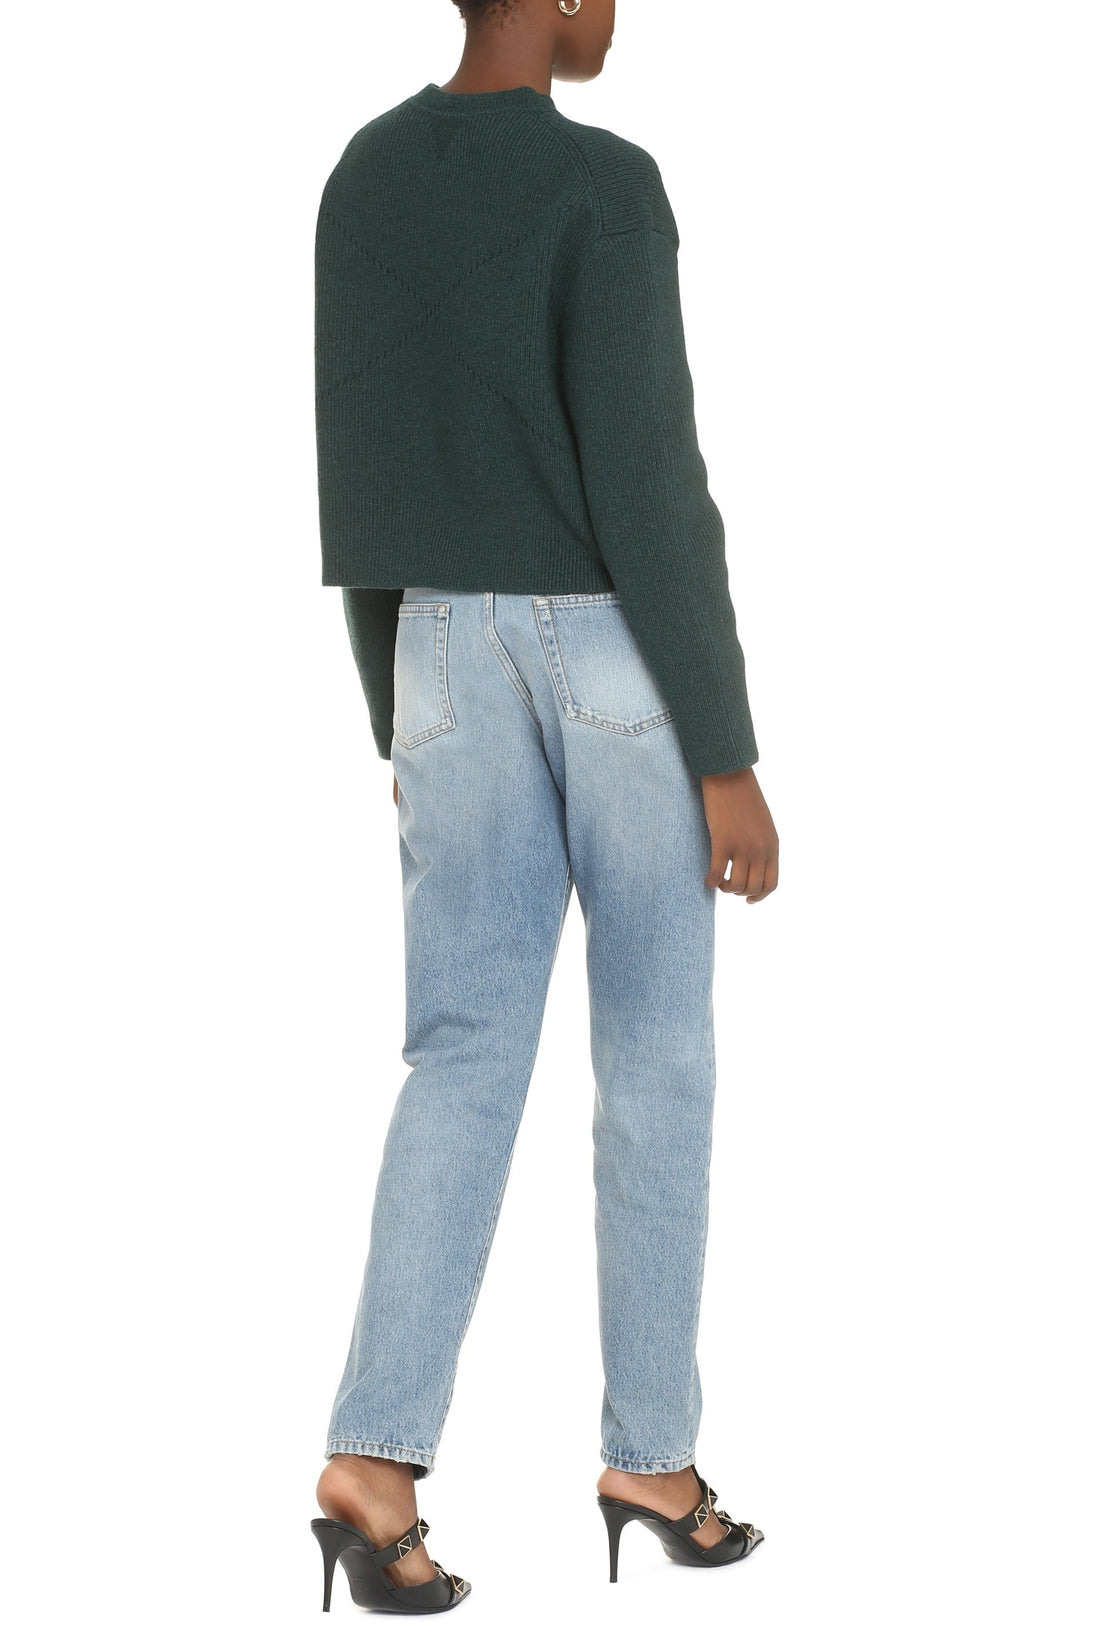 Bottega Veneta-OUTLET-SALE-Ribbed cashmere sweater-ARCHIVIST